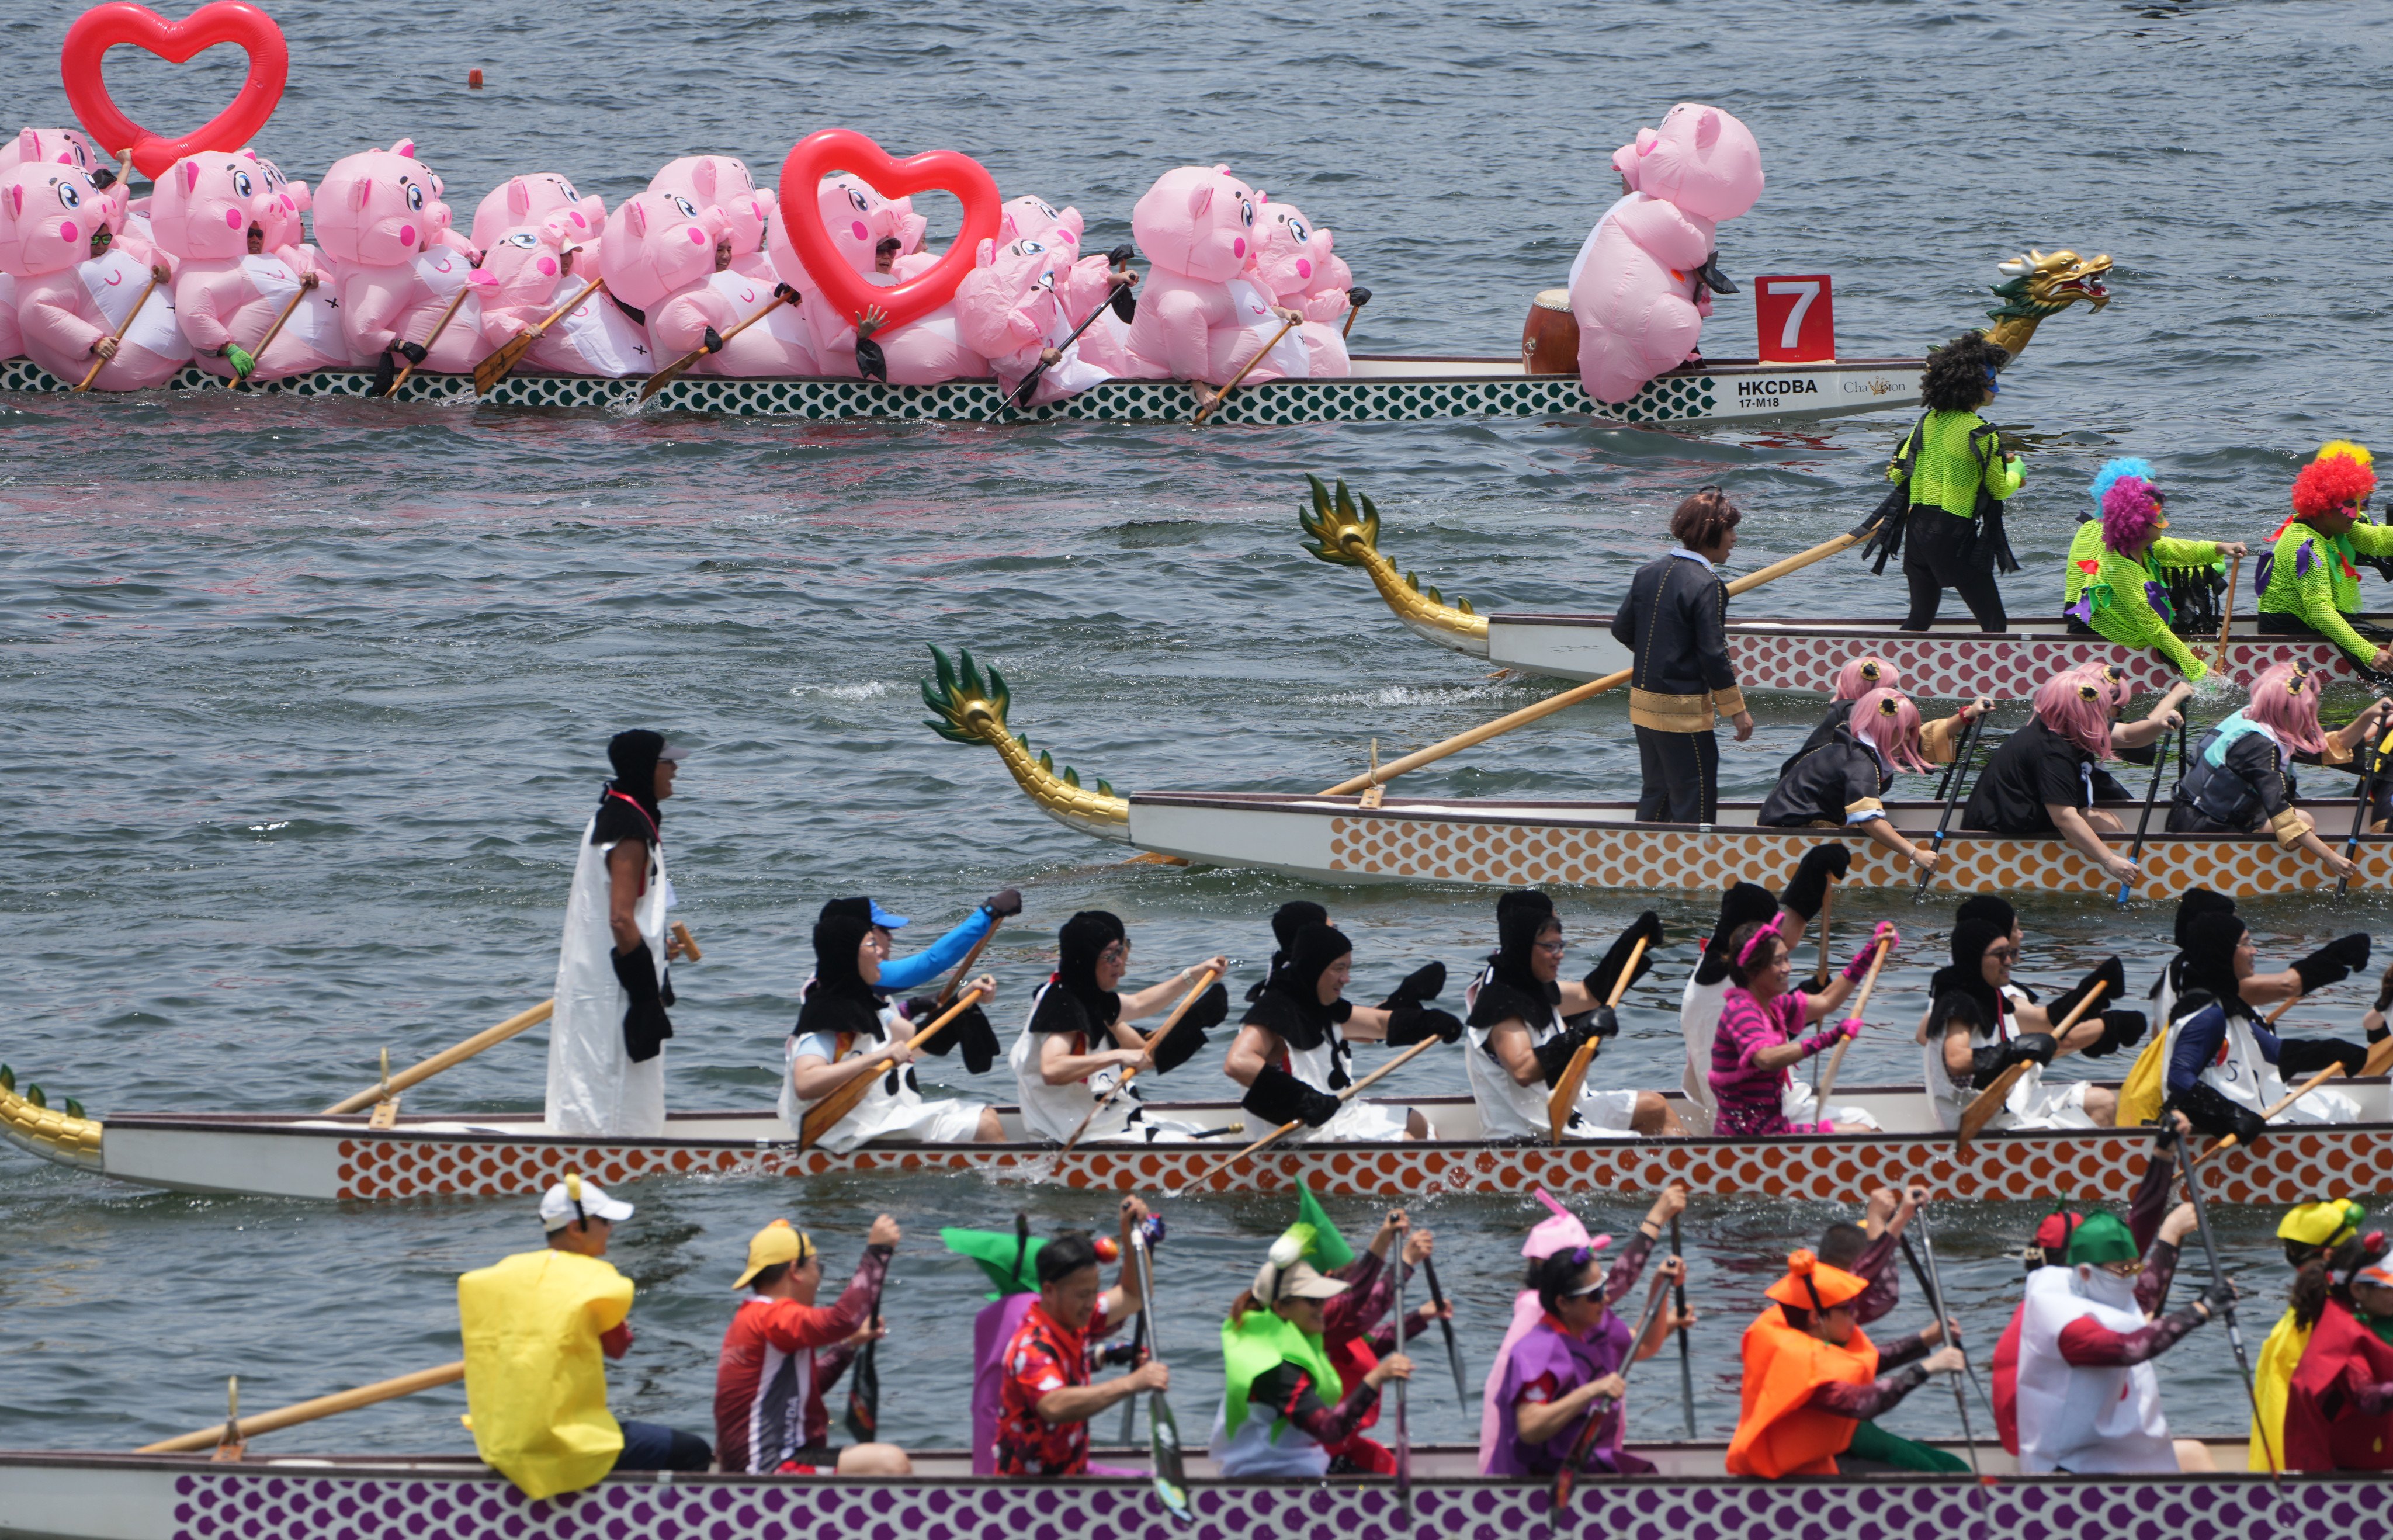 Paddlers join the fancy dress competition at last year’s Hong Kong International Dragon Boat Races. Photo: Sam Tsang